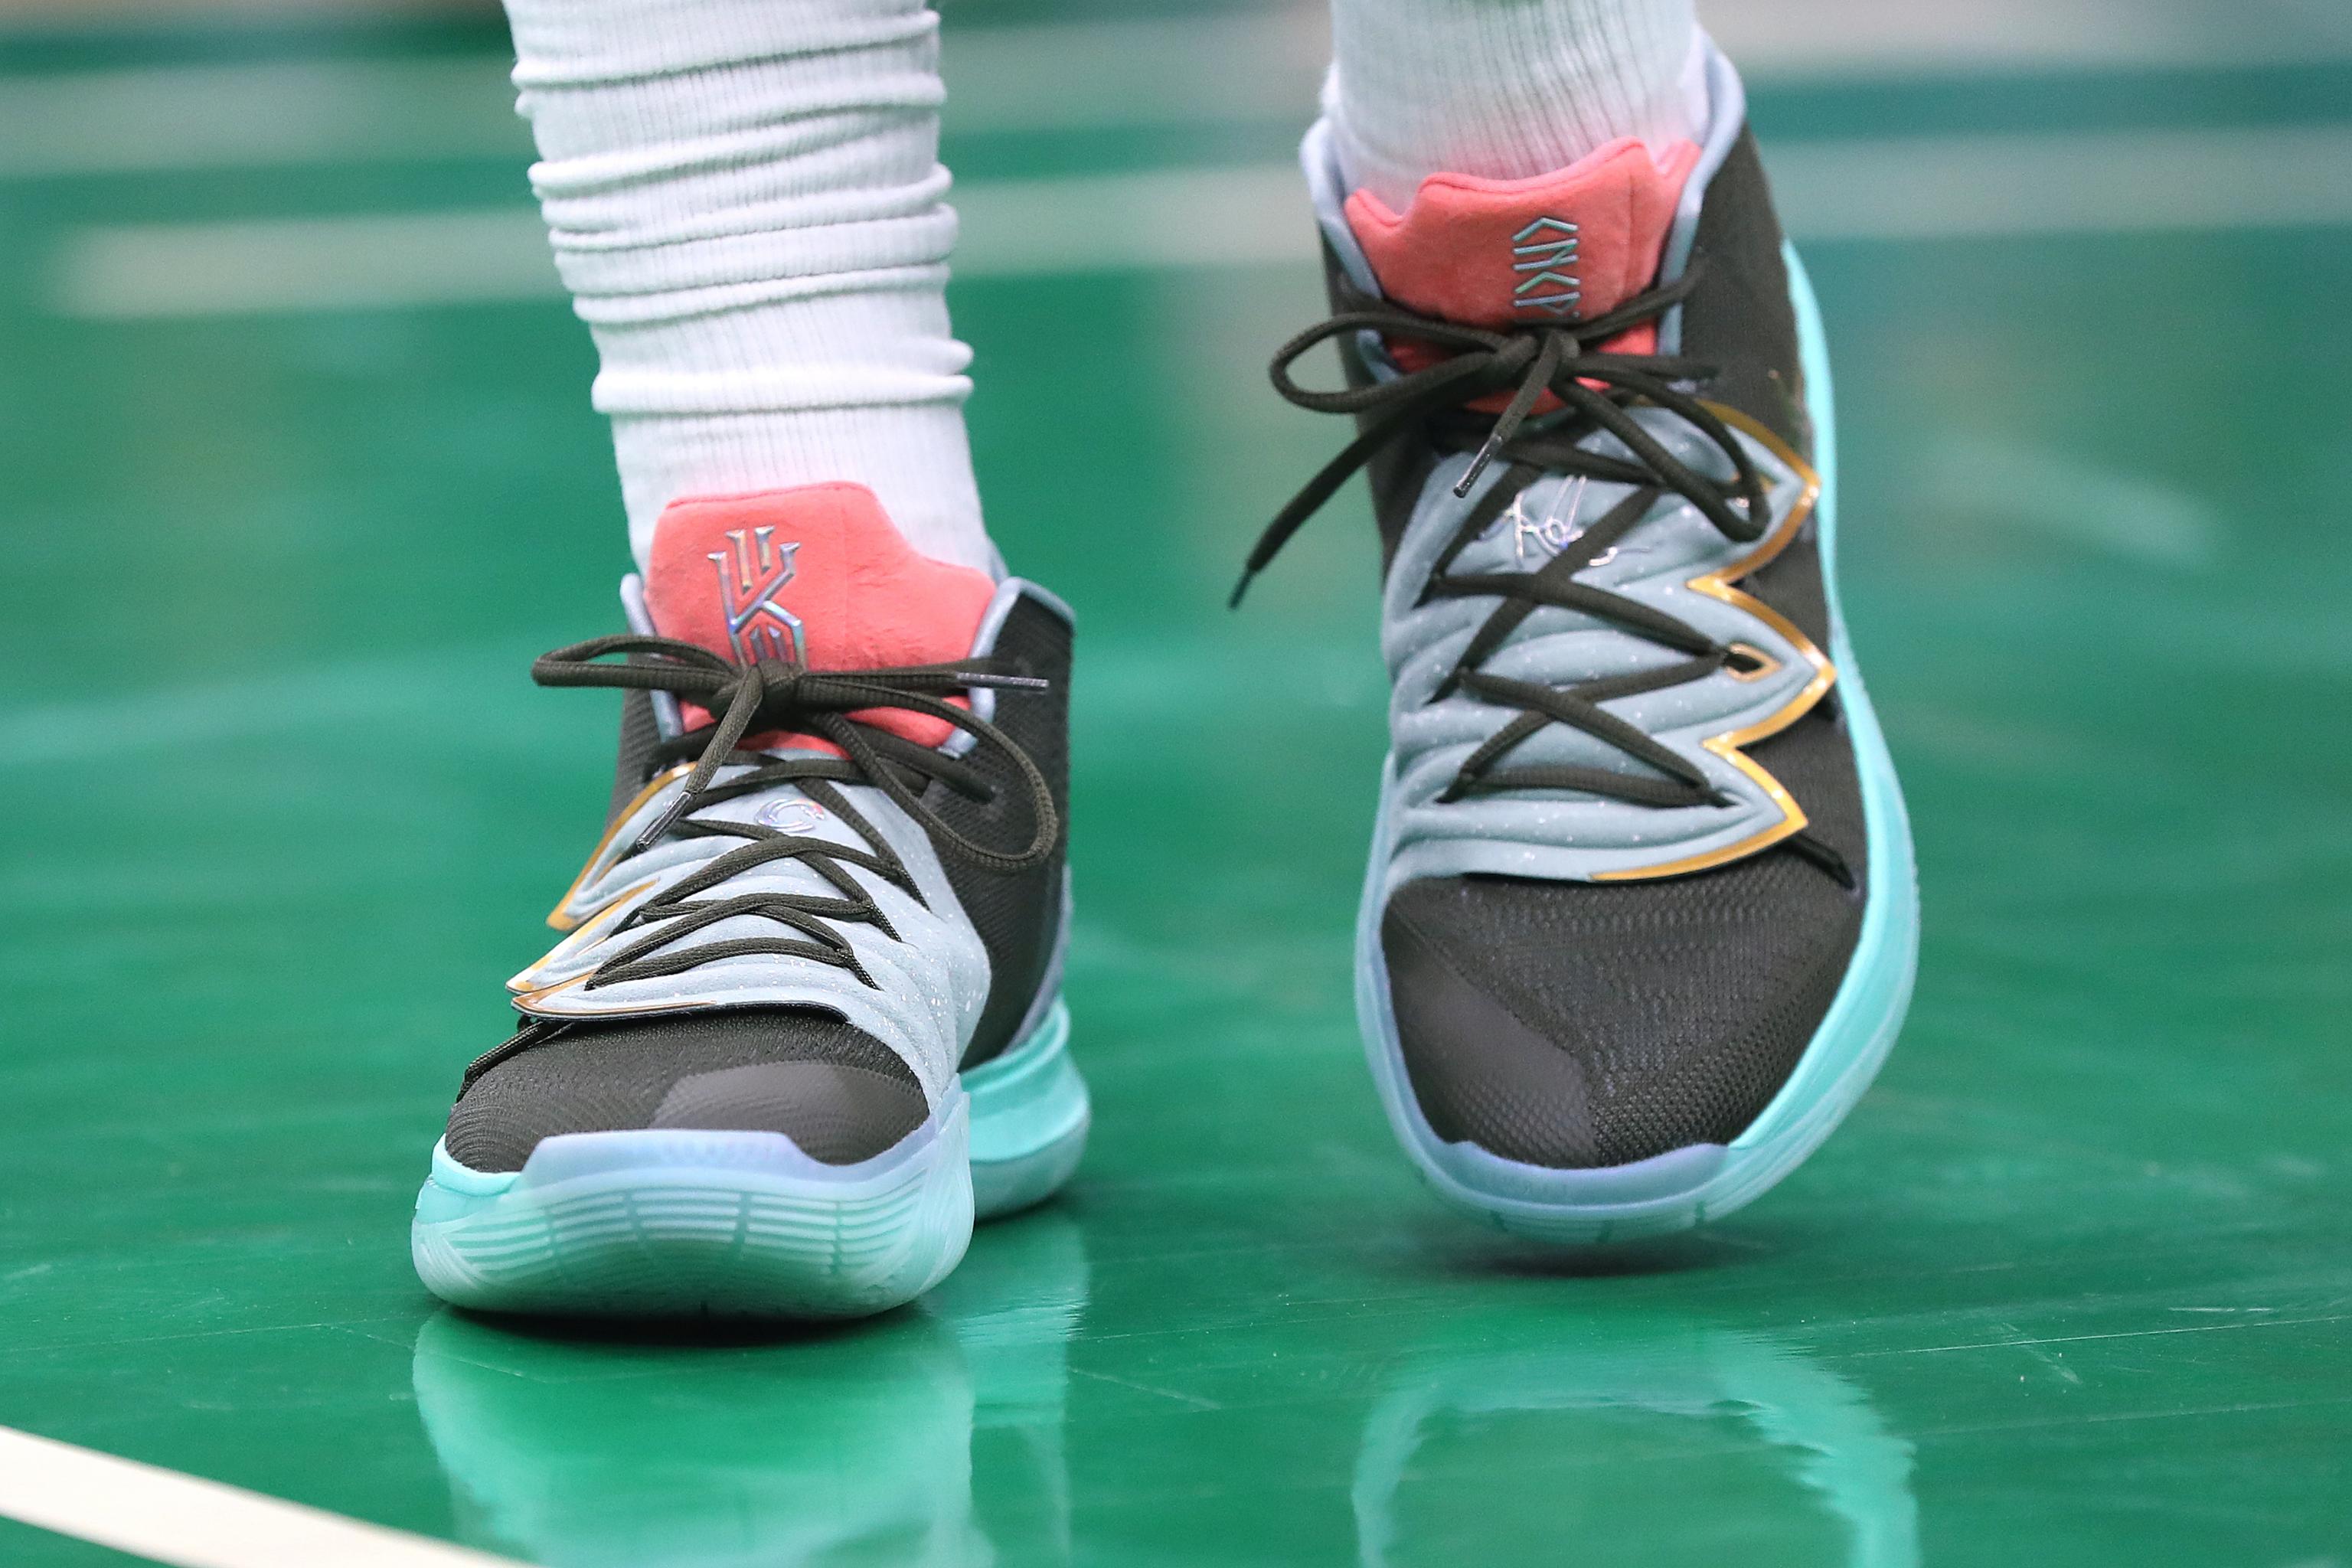 B/R Kicks on X: .@DeMar_DeRozan wearing the Nike Kobe 5 Protro